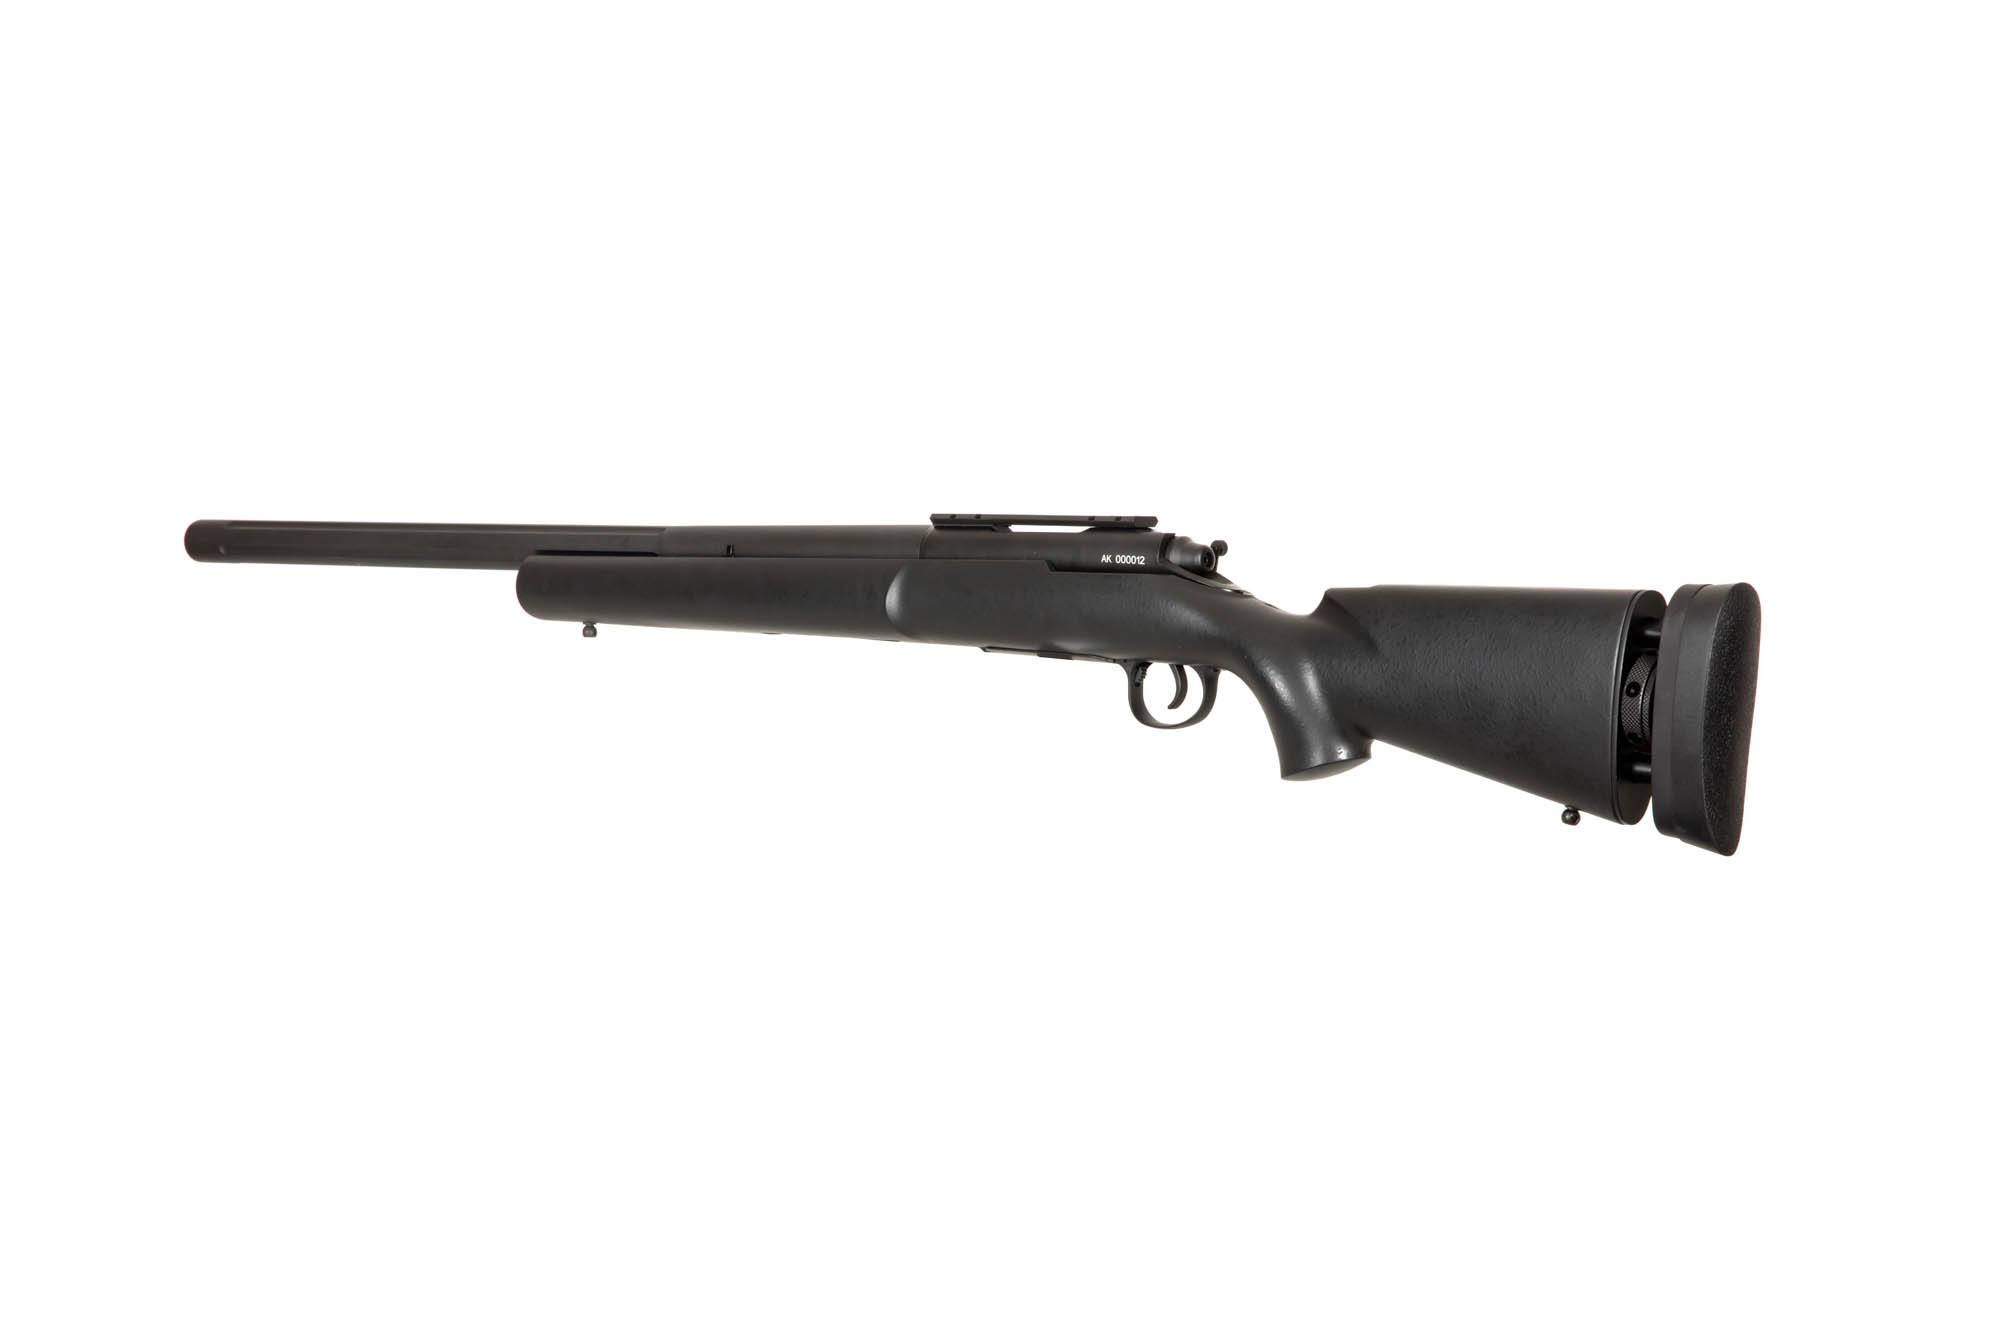 M24 airsoft sniper rifle